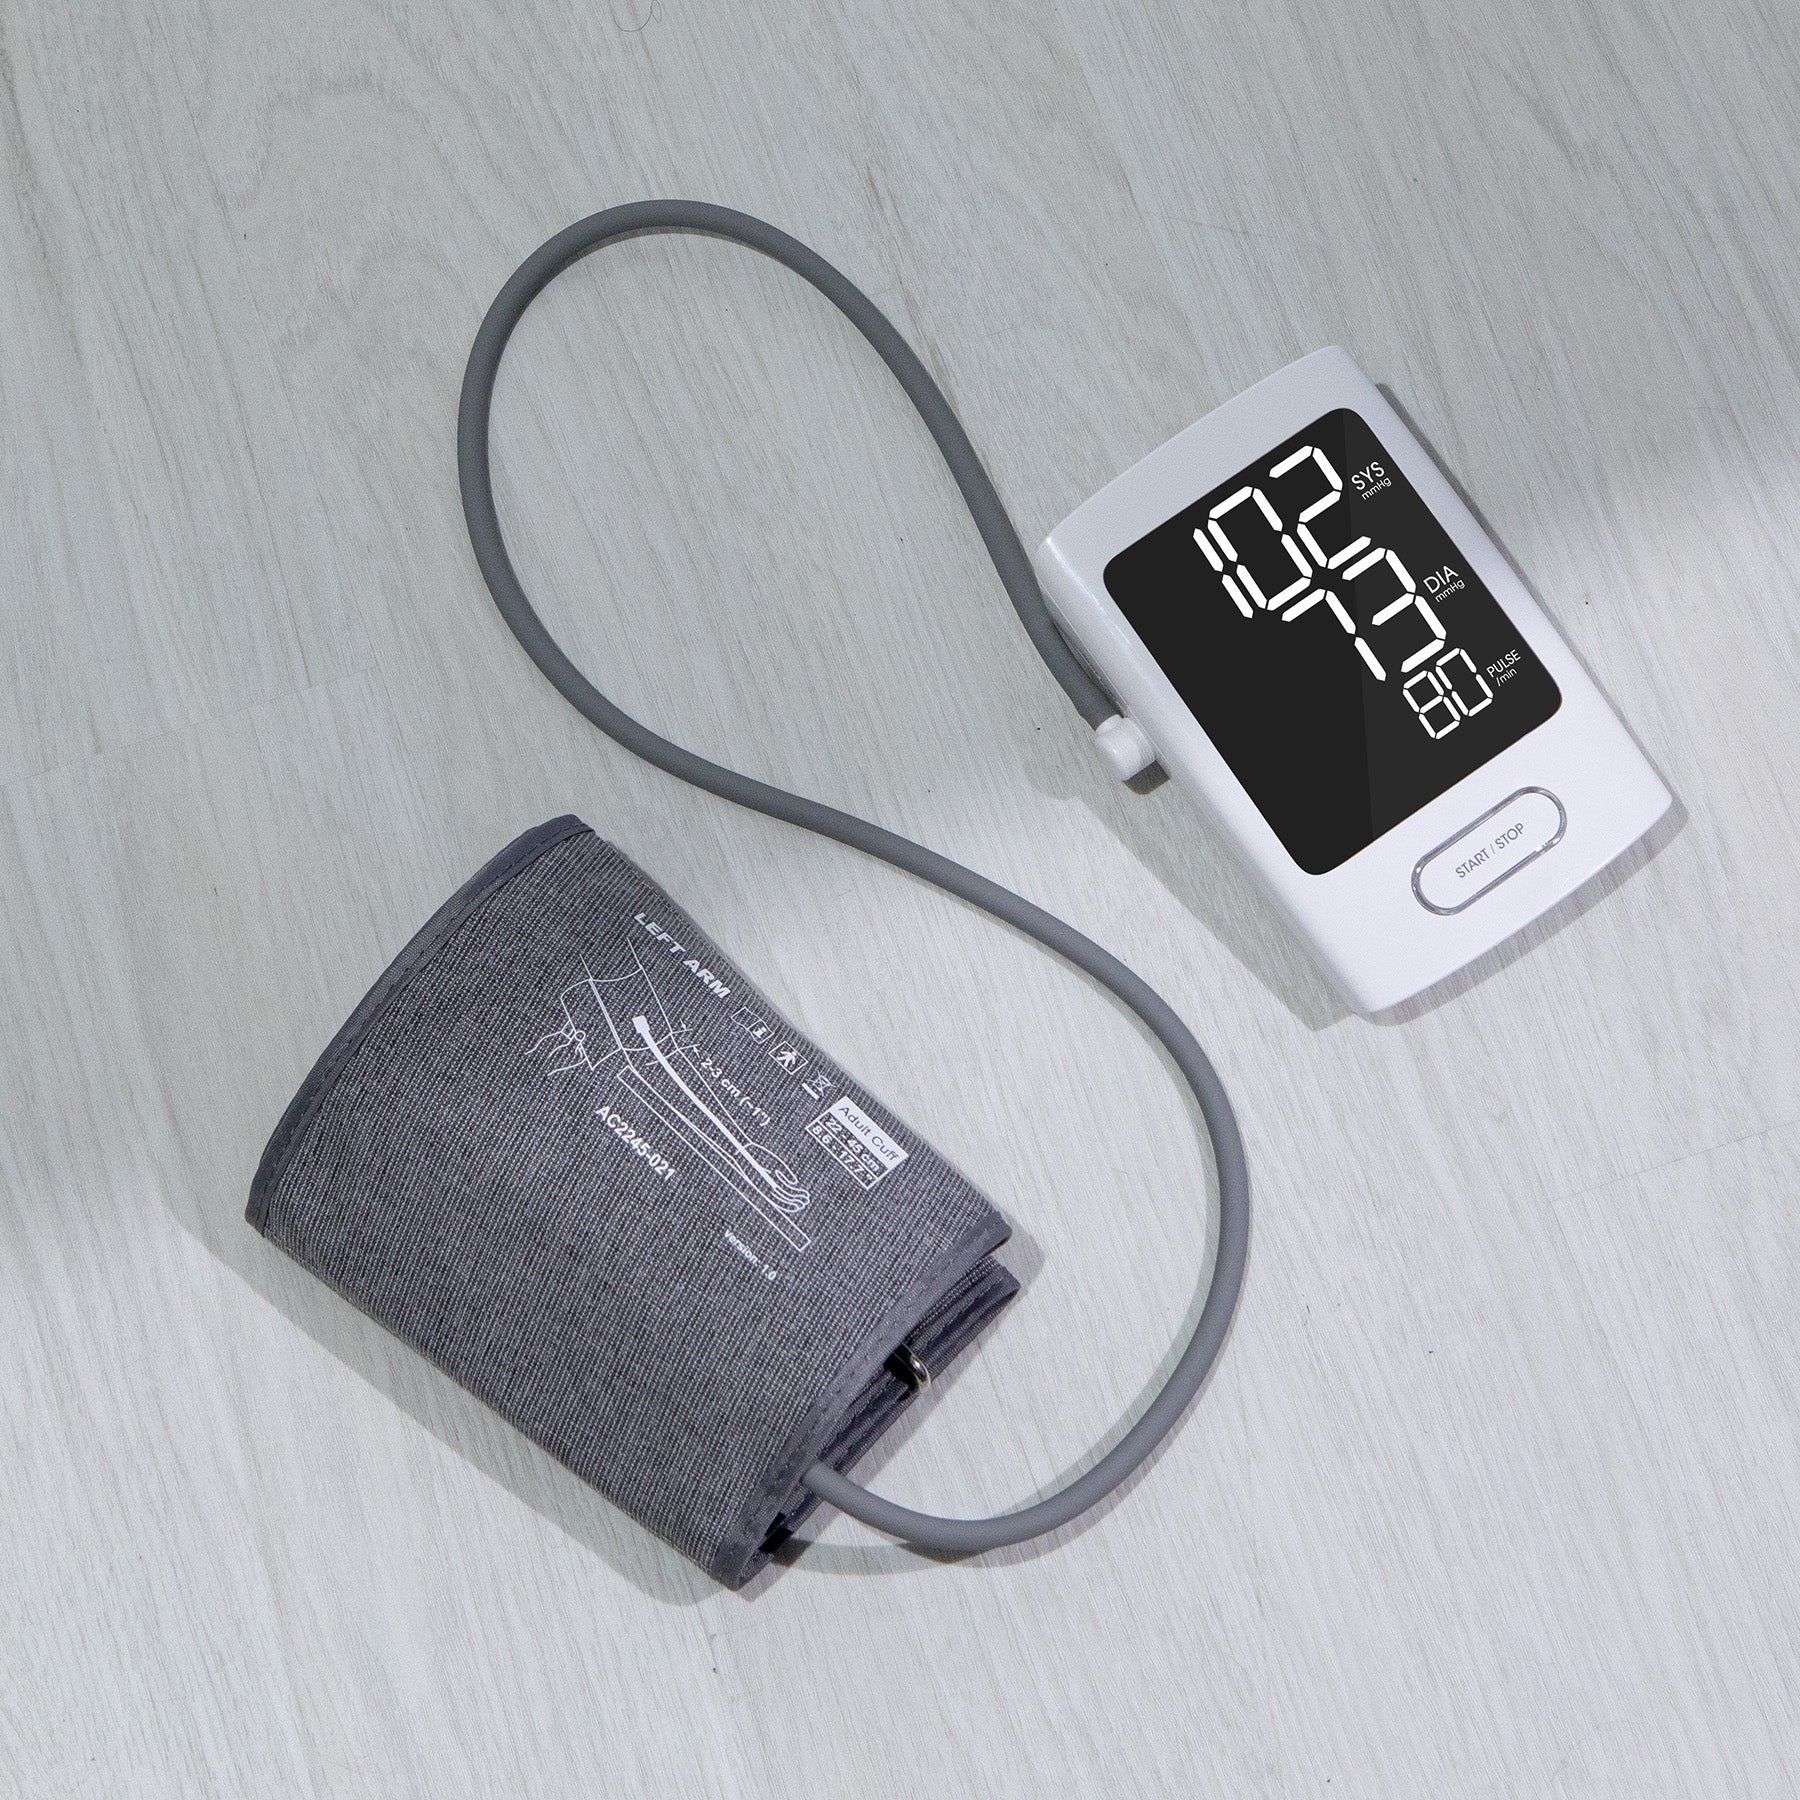 VS-4300 Vitasigns Bluetooth Travel Blood Pressure Monitor (Black